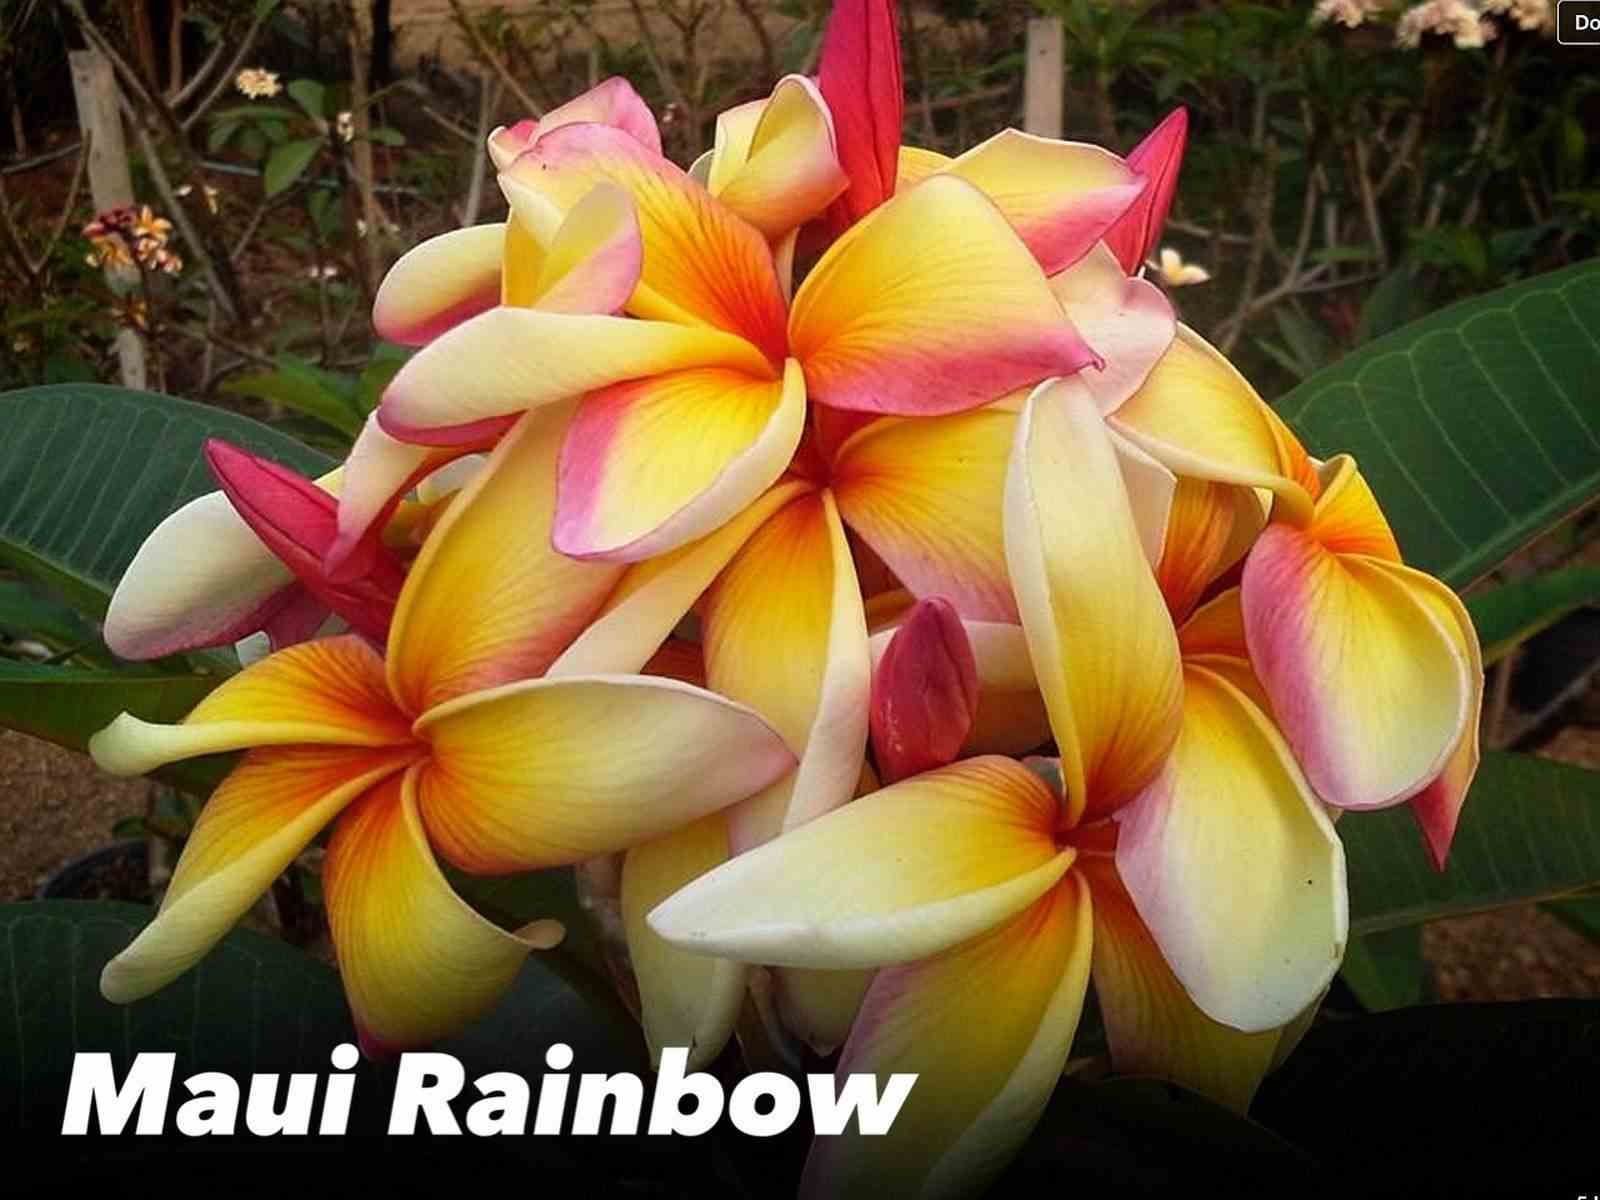 Plumeria rubra "maui rainbow" (frangipanier) taille pot de 2 litres ? 20/30 cm -   blanc/jaune/rose